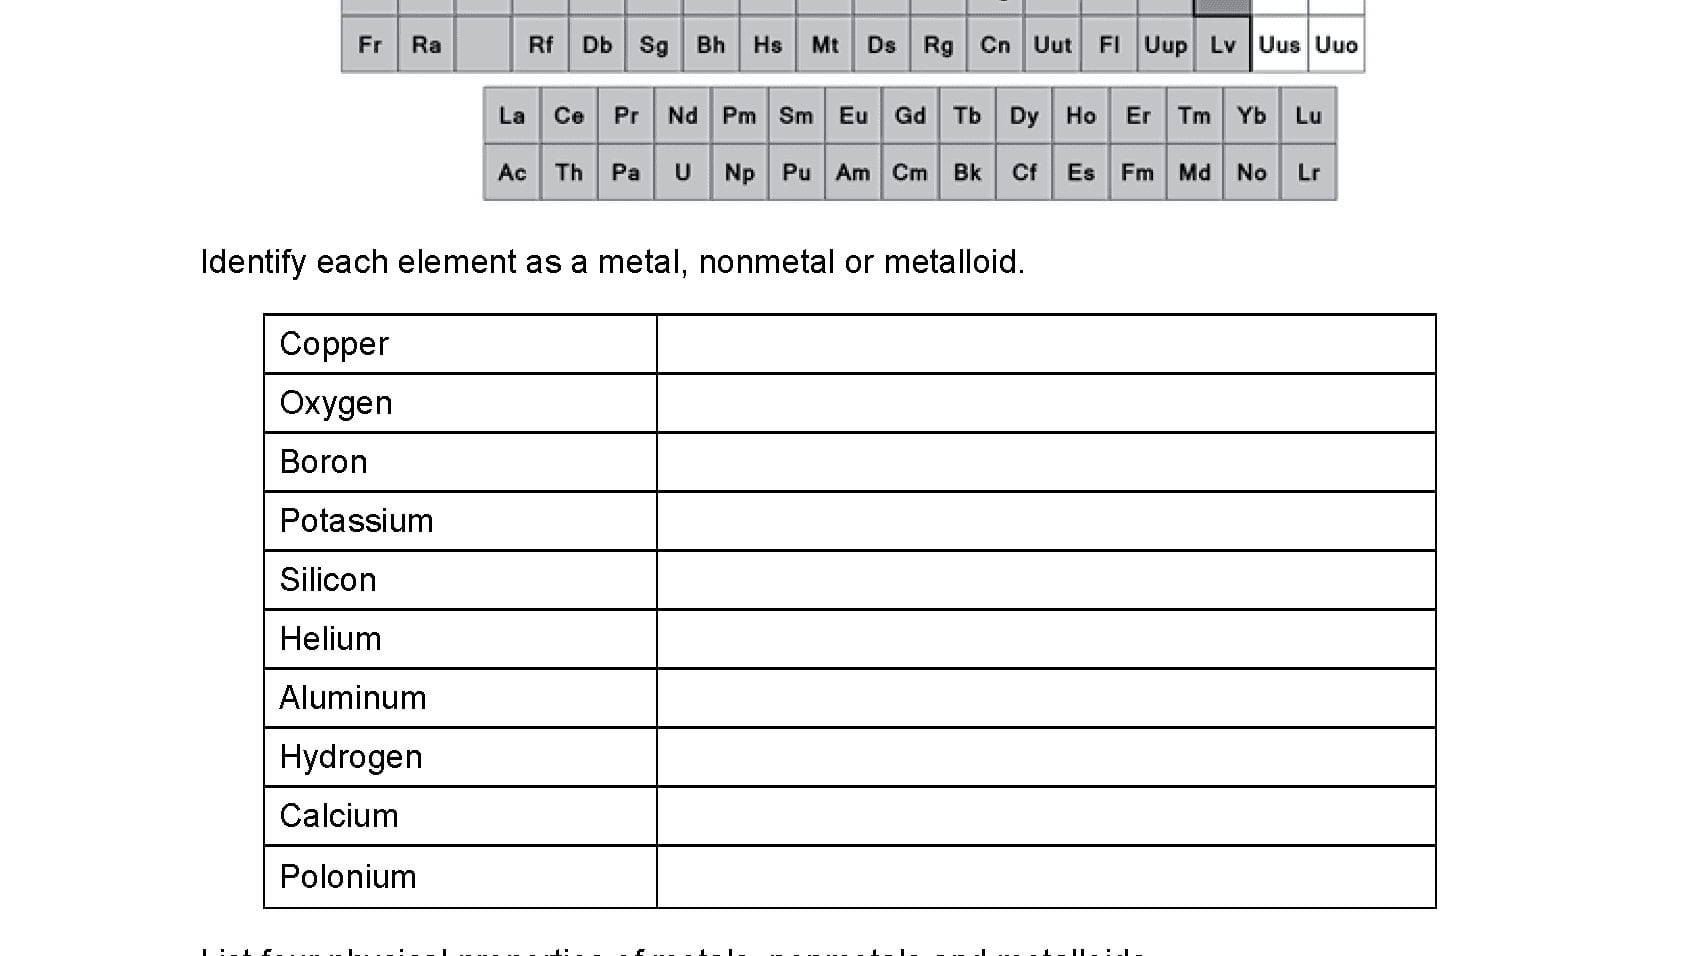 Metals Nonmetals And Metalloids Worksheet